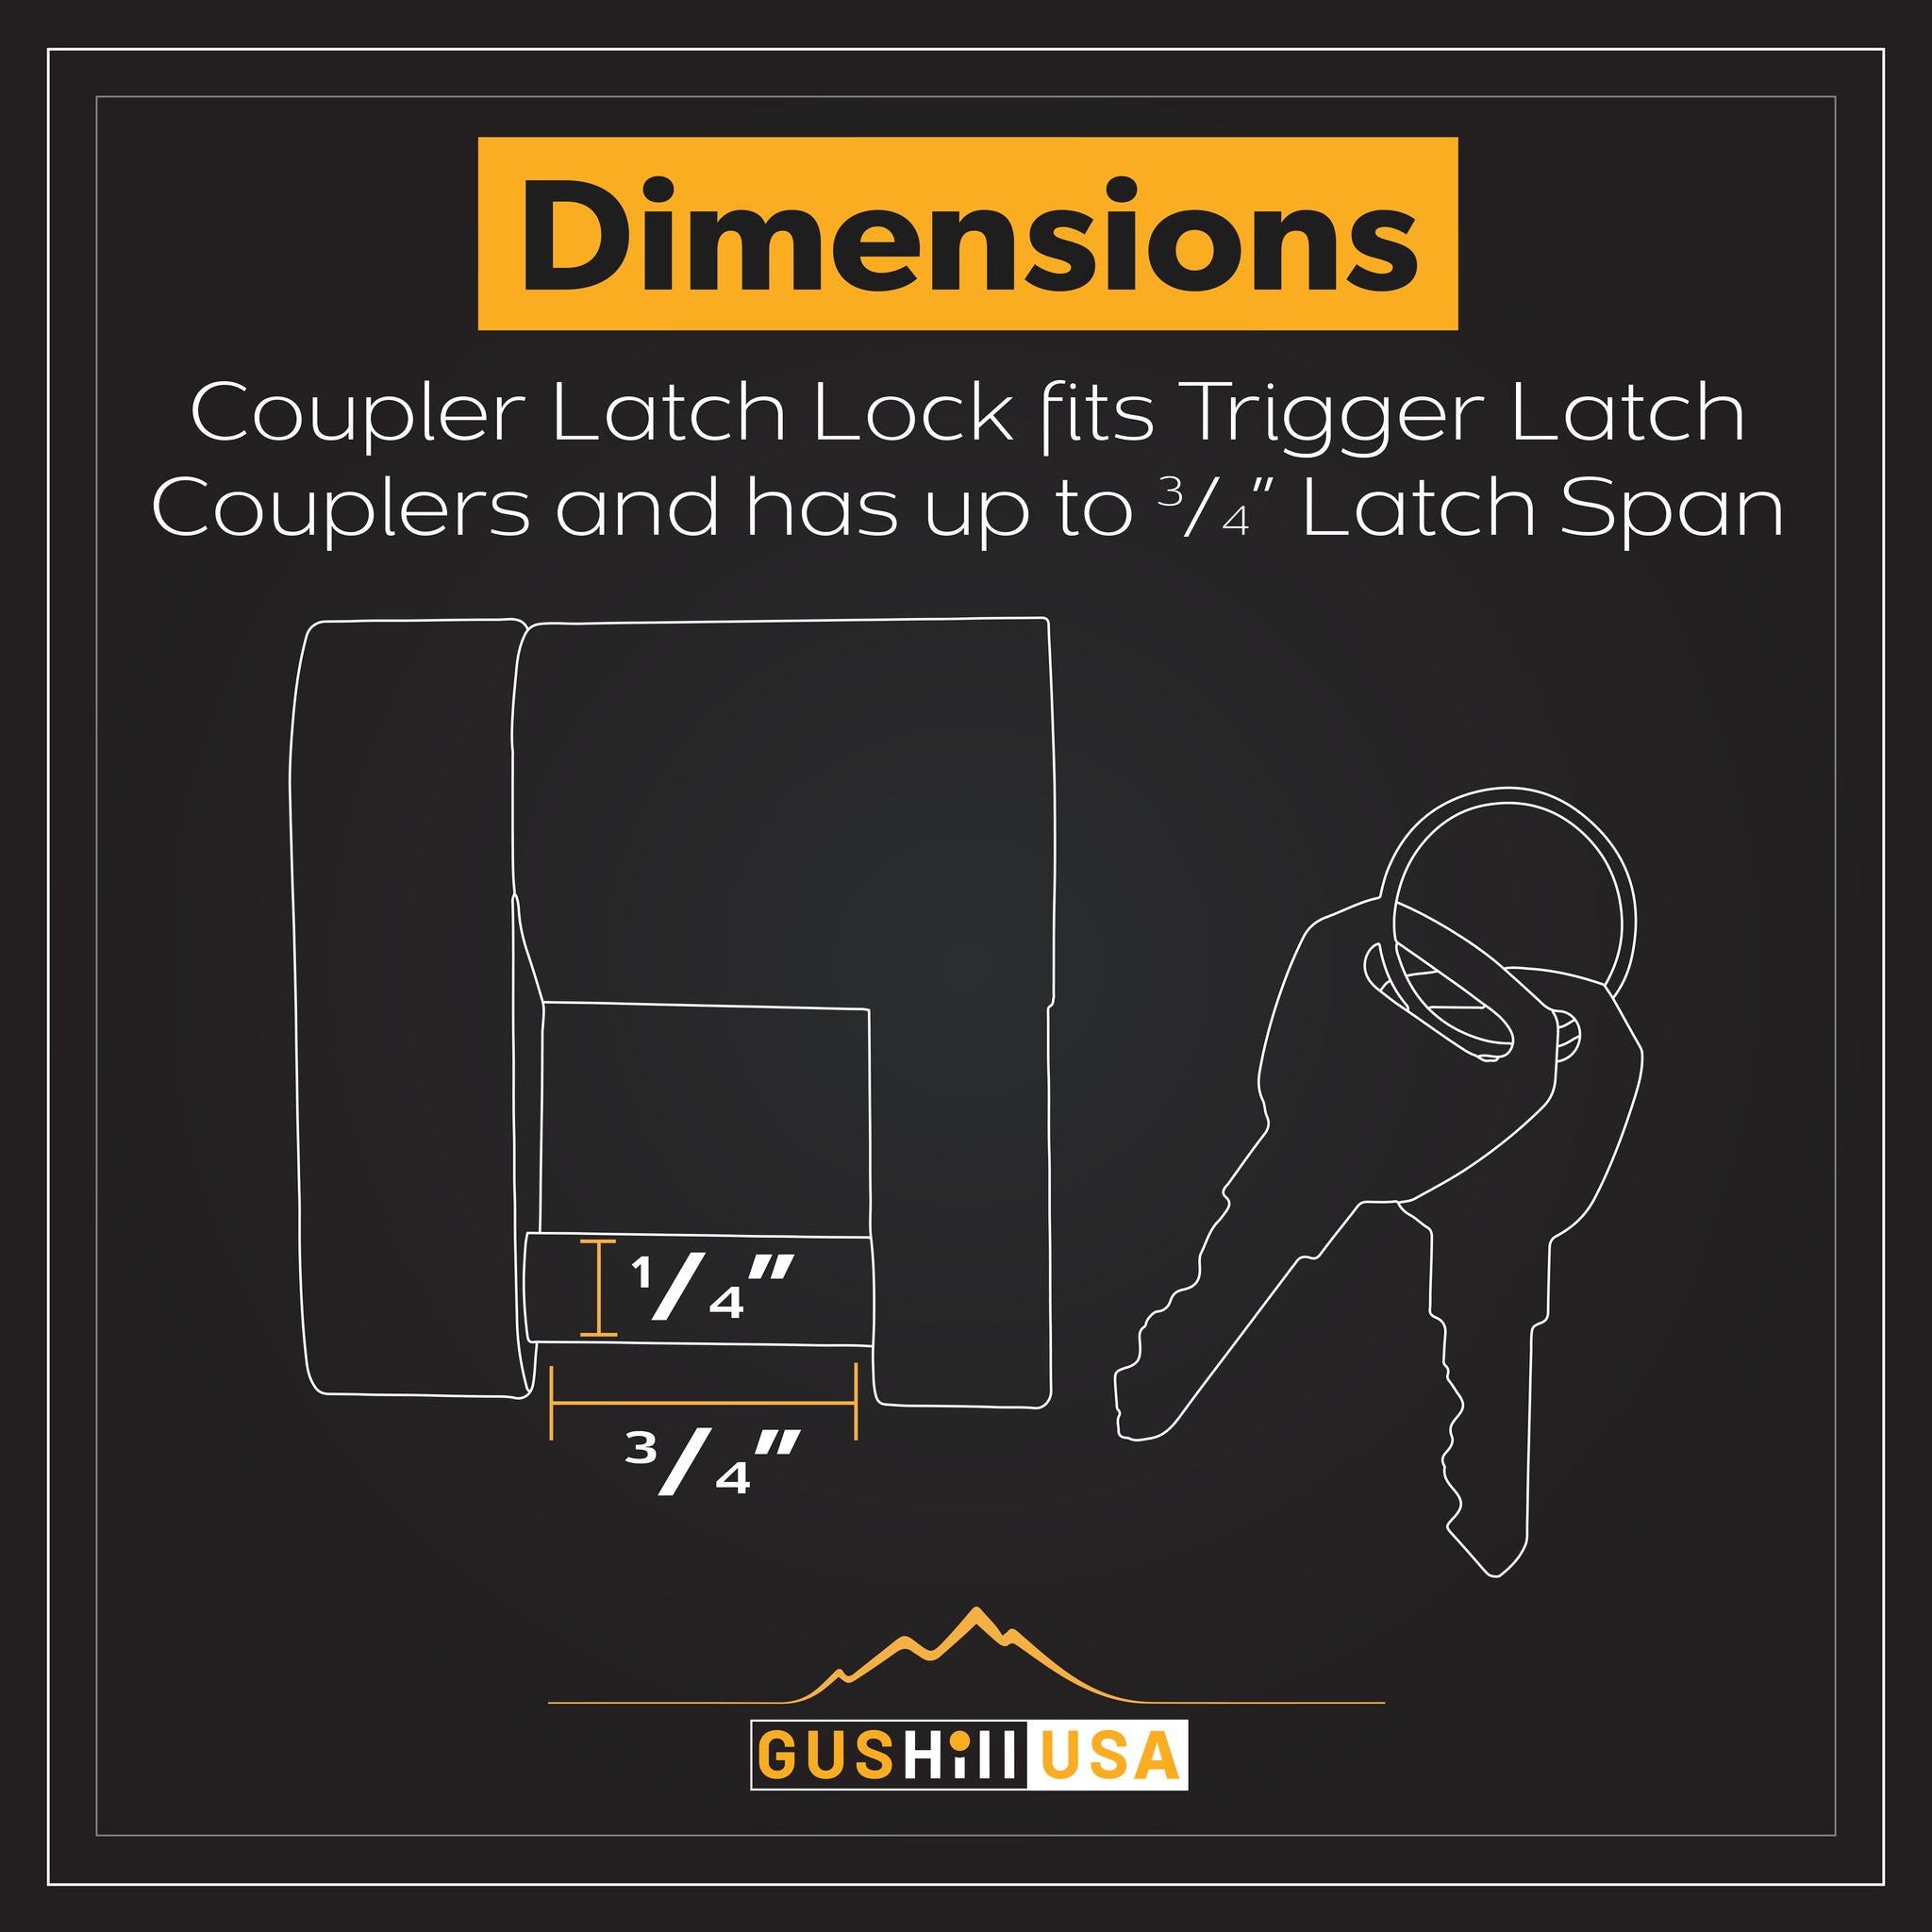 Coupler Latch Lock